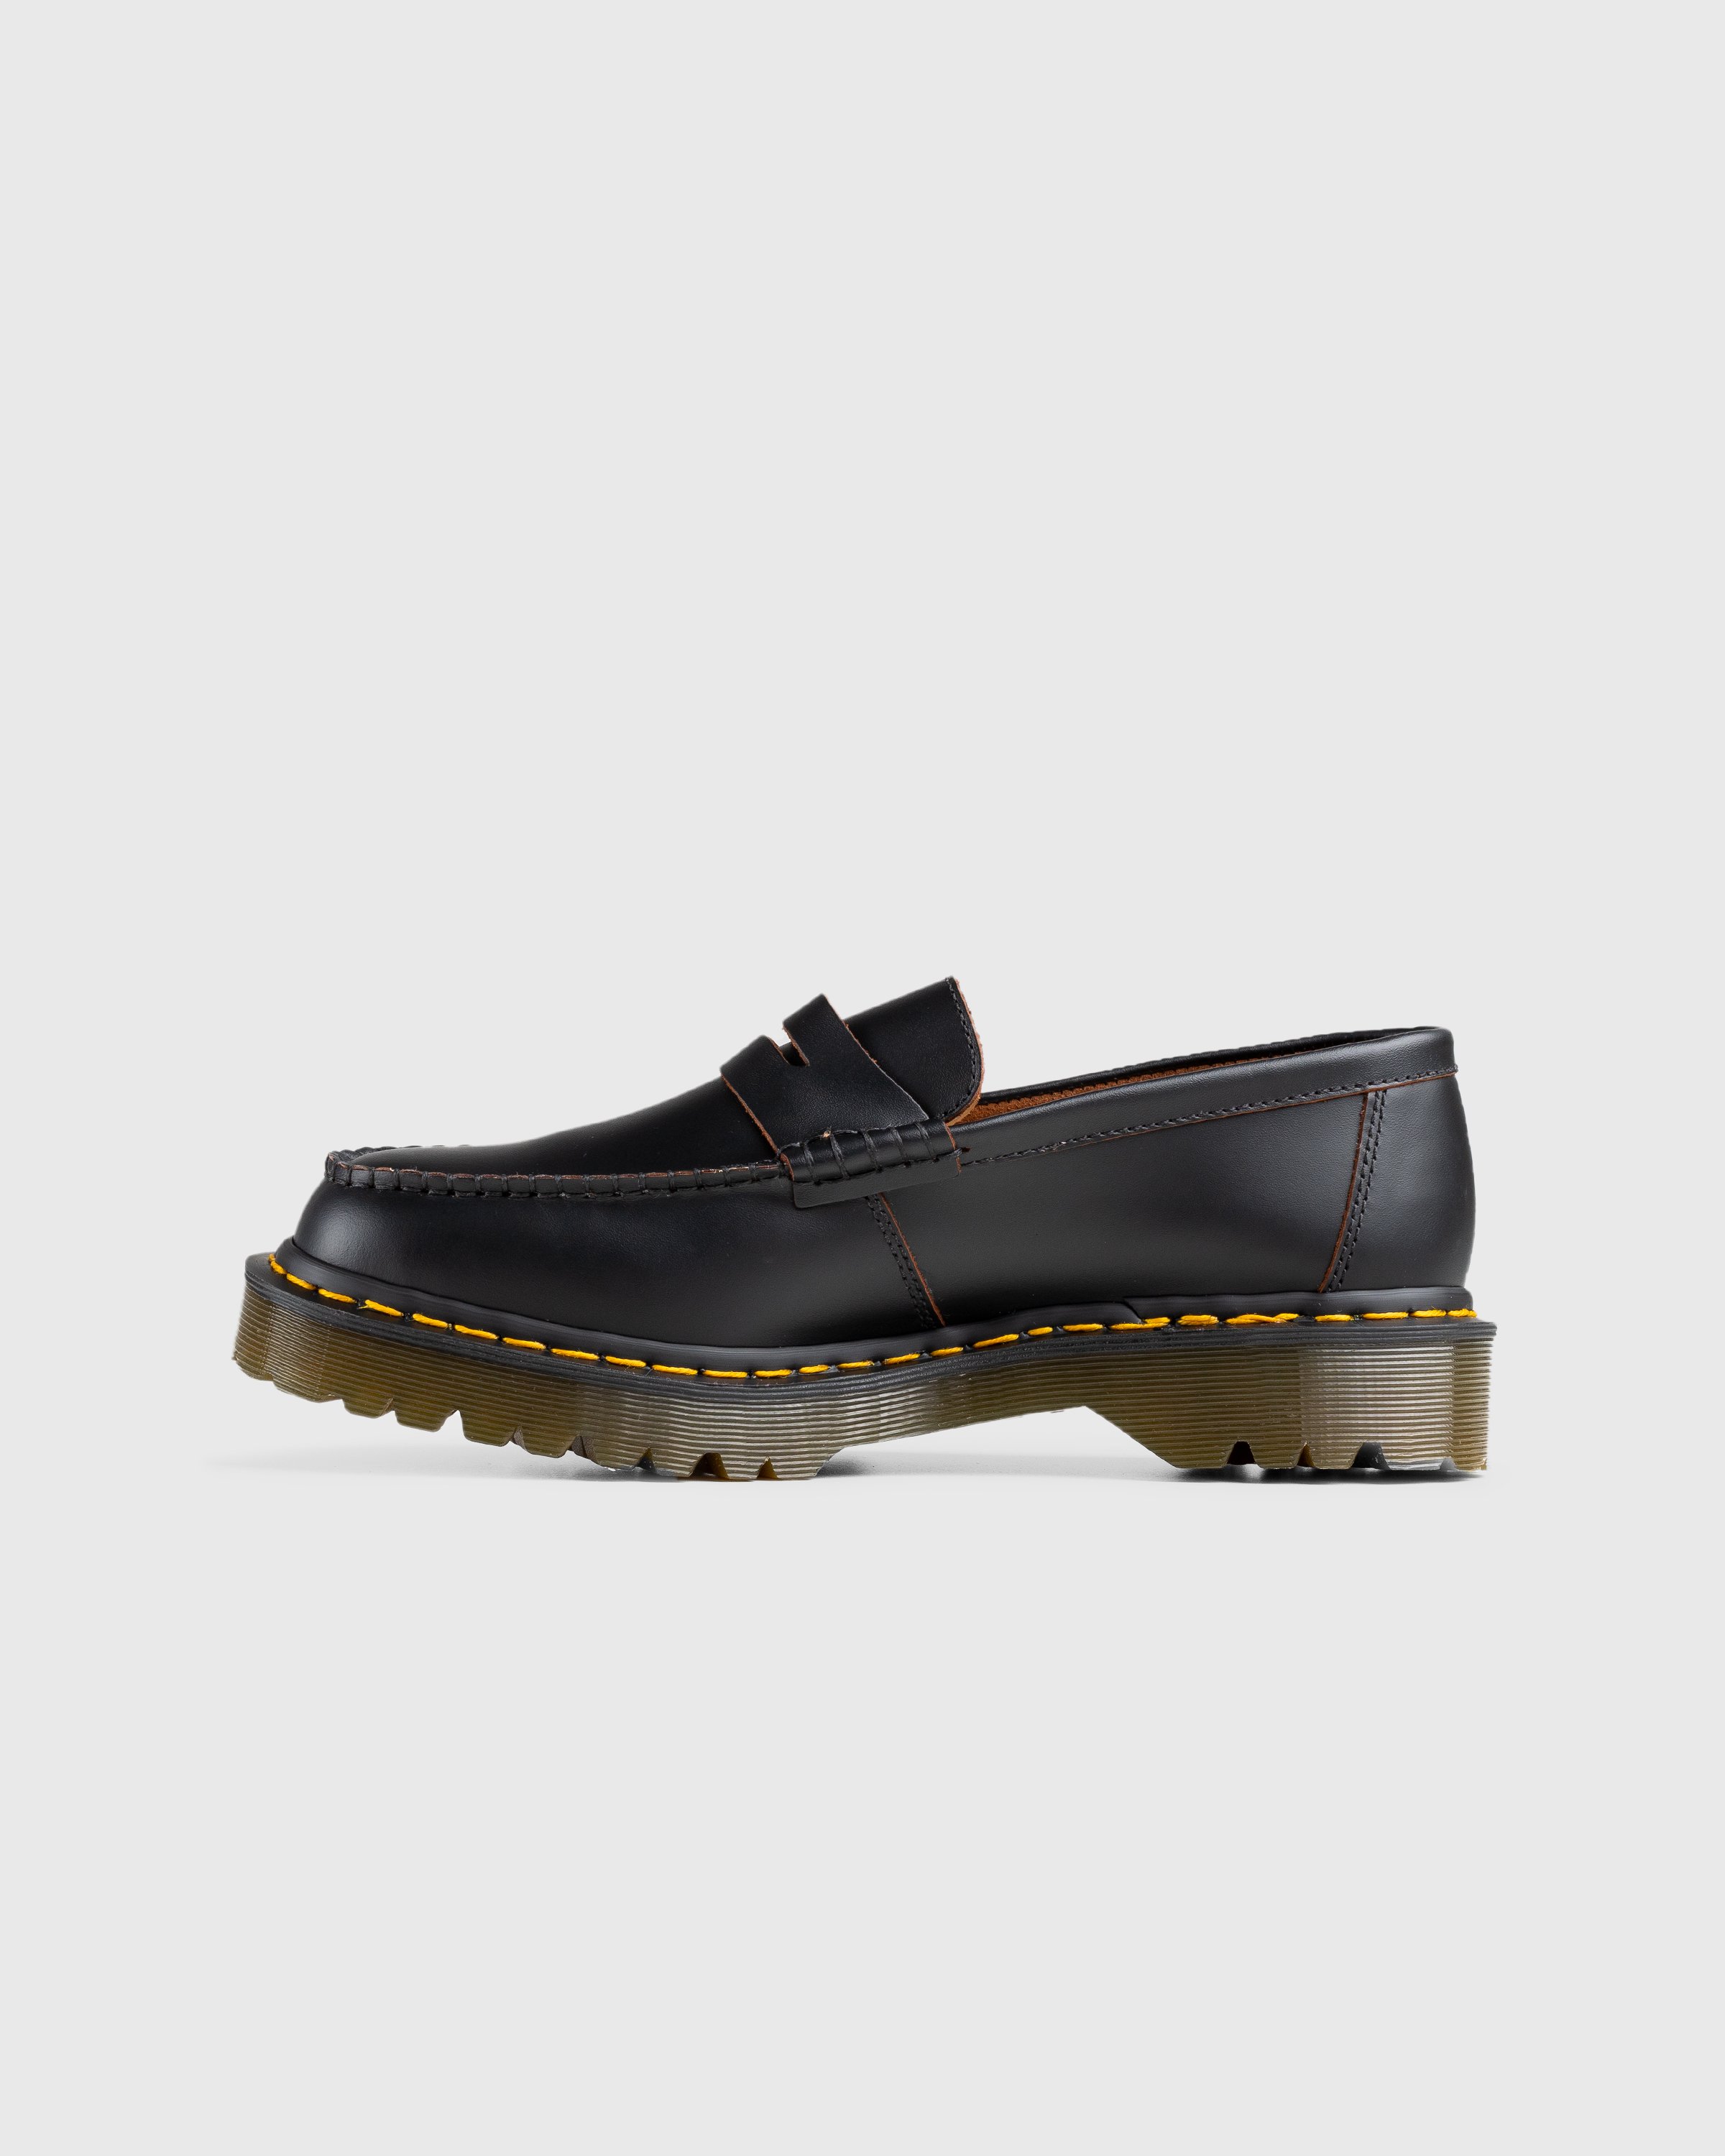 Dr. Martens - Penton Bex Quilon Leather Loafers Black - Footwear - Black - Image 2